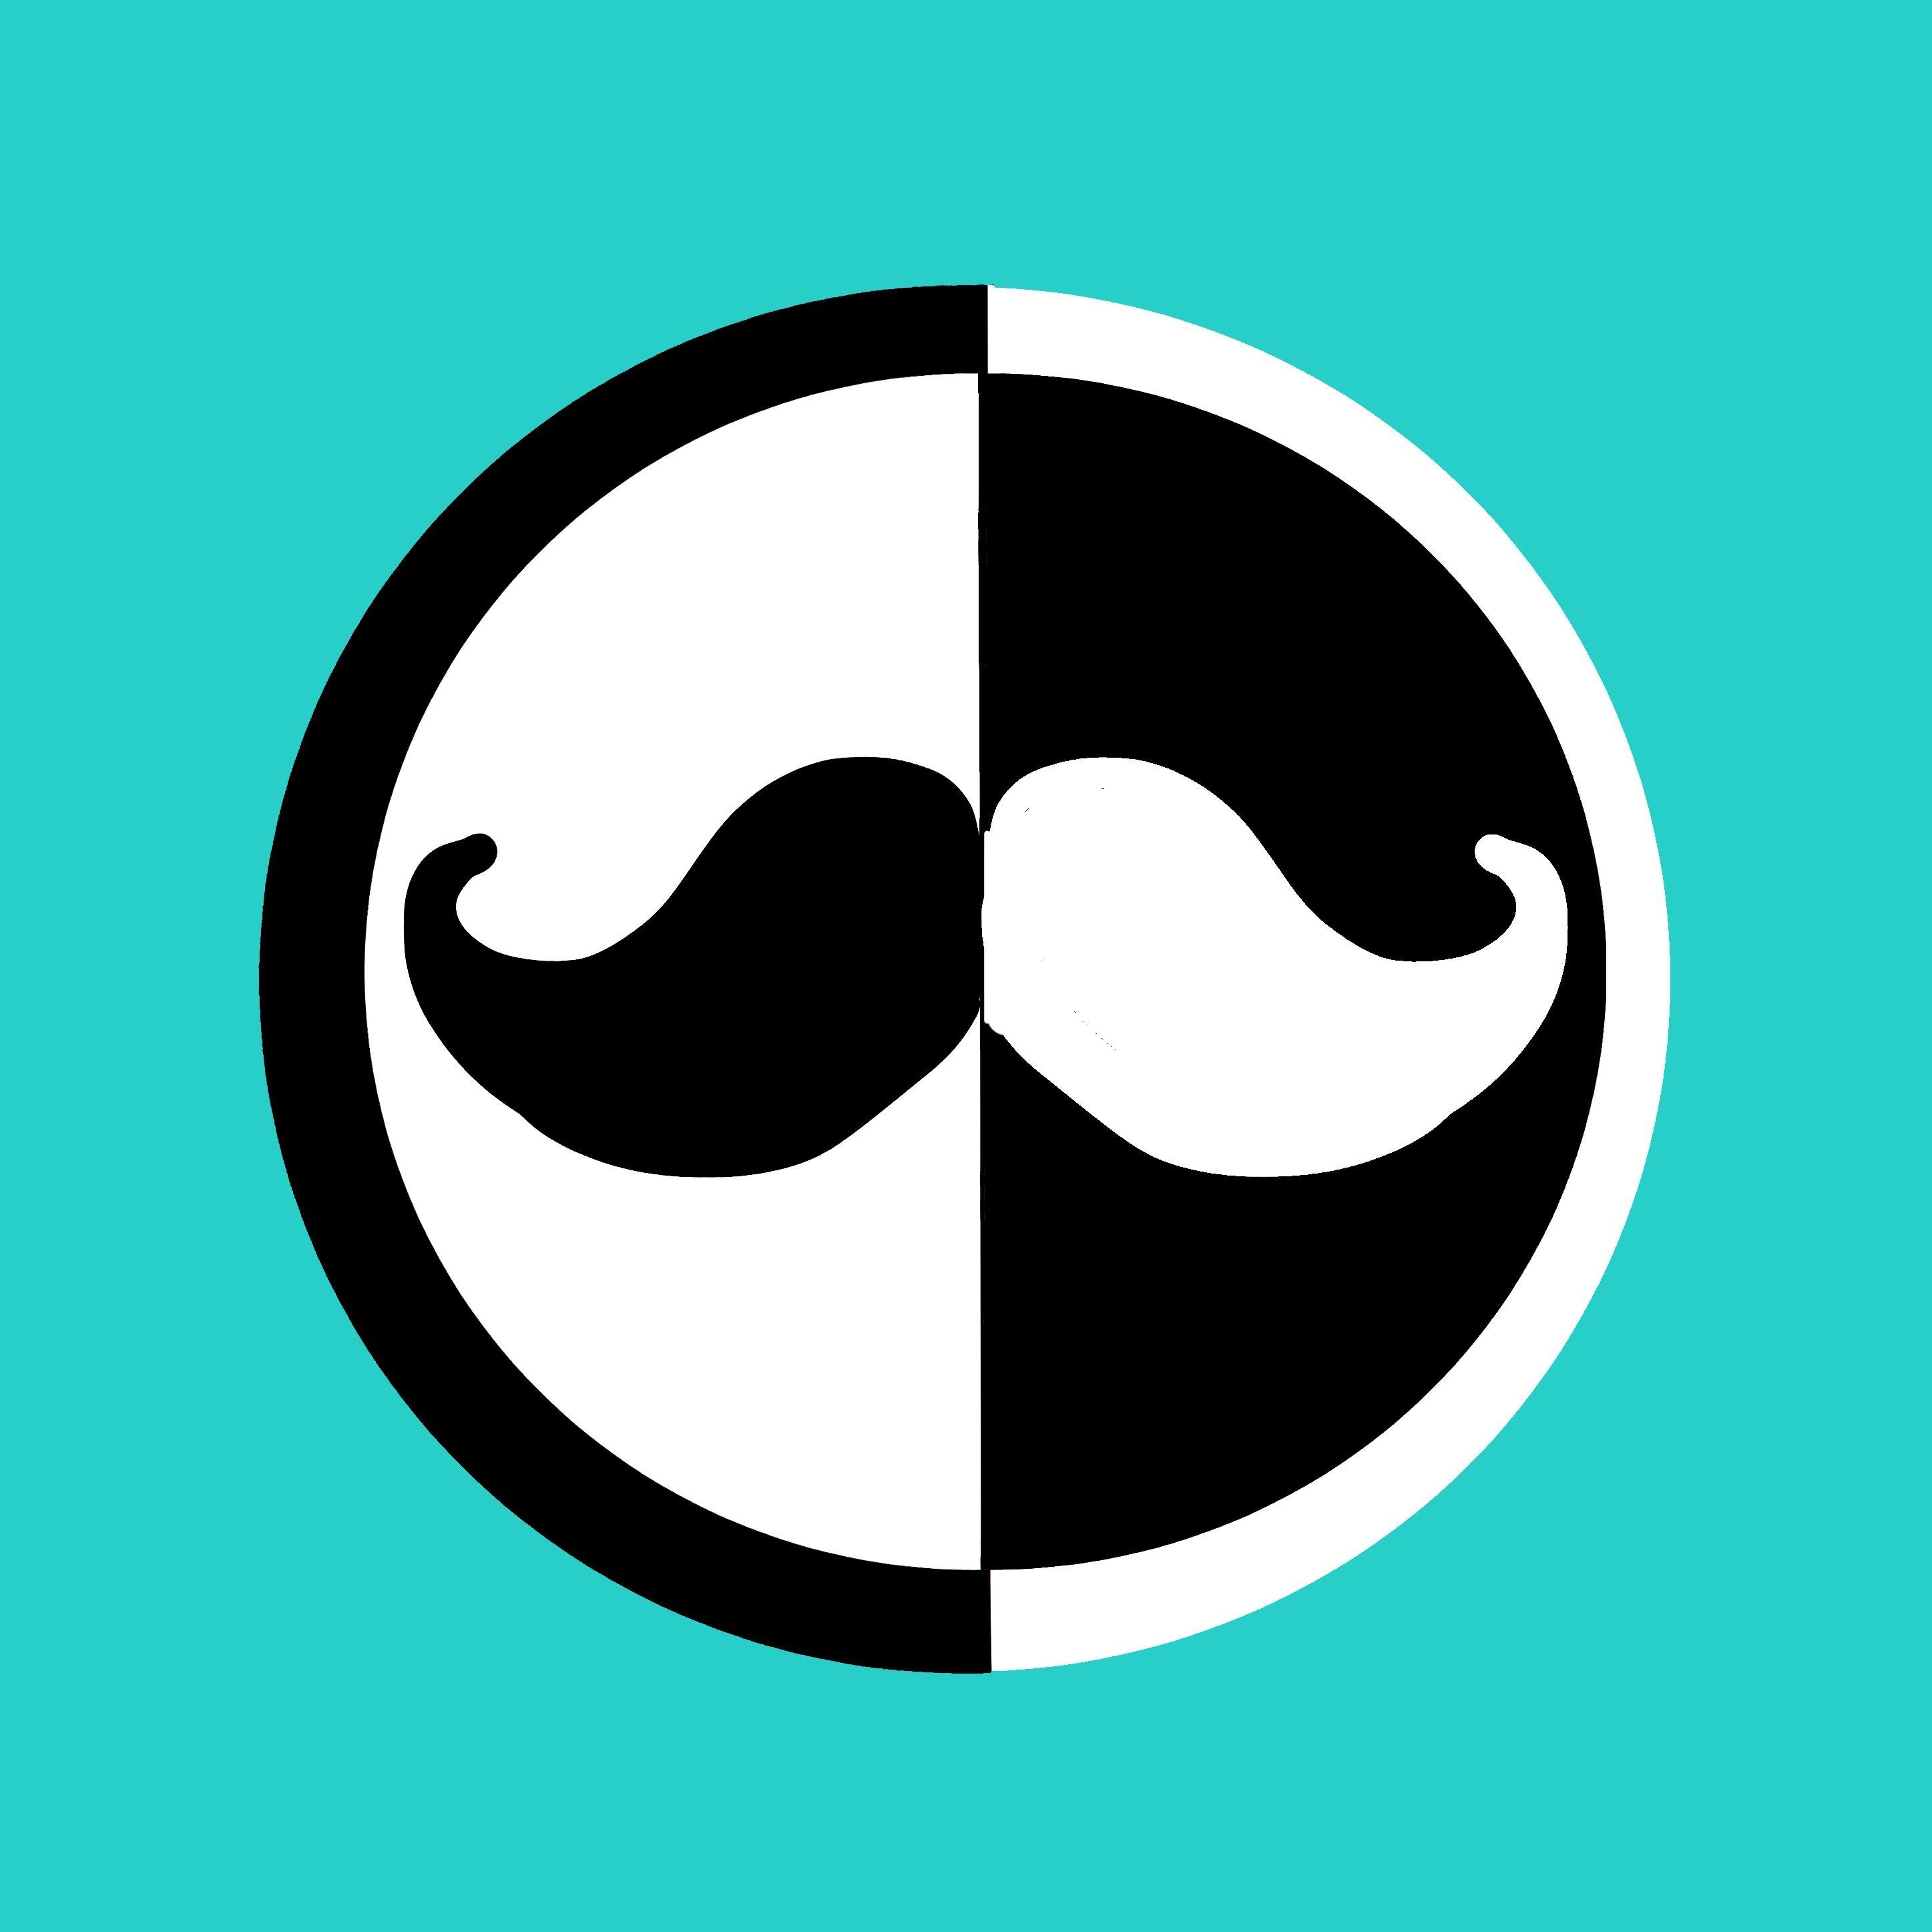 Moustache Logo - File:Moustache Movies logo.jpg - Wikimedia Commons